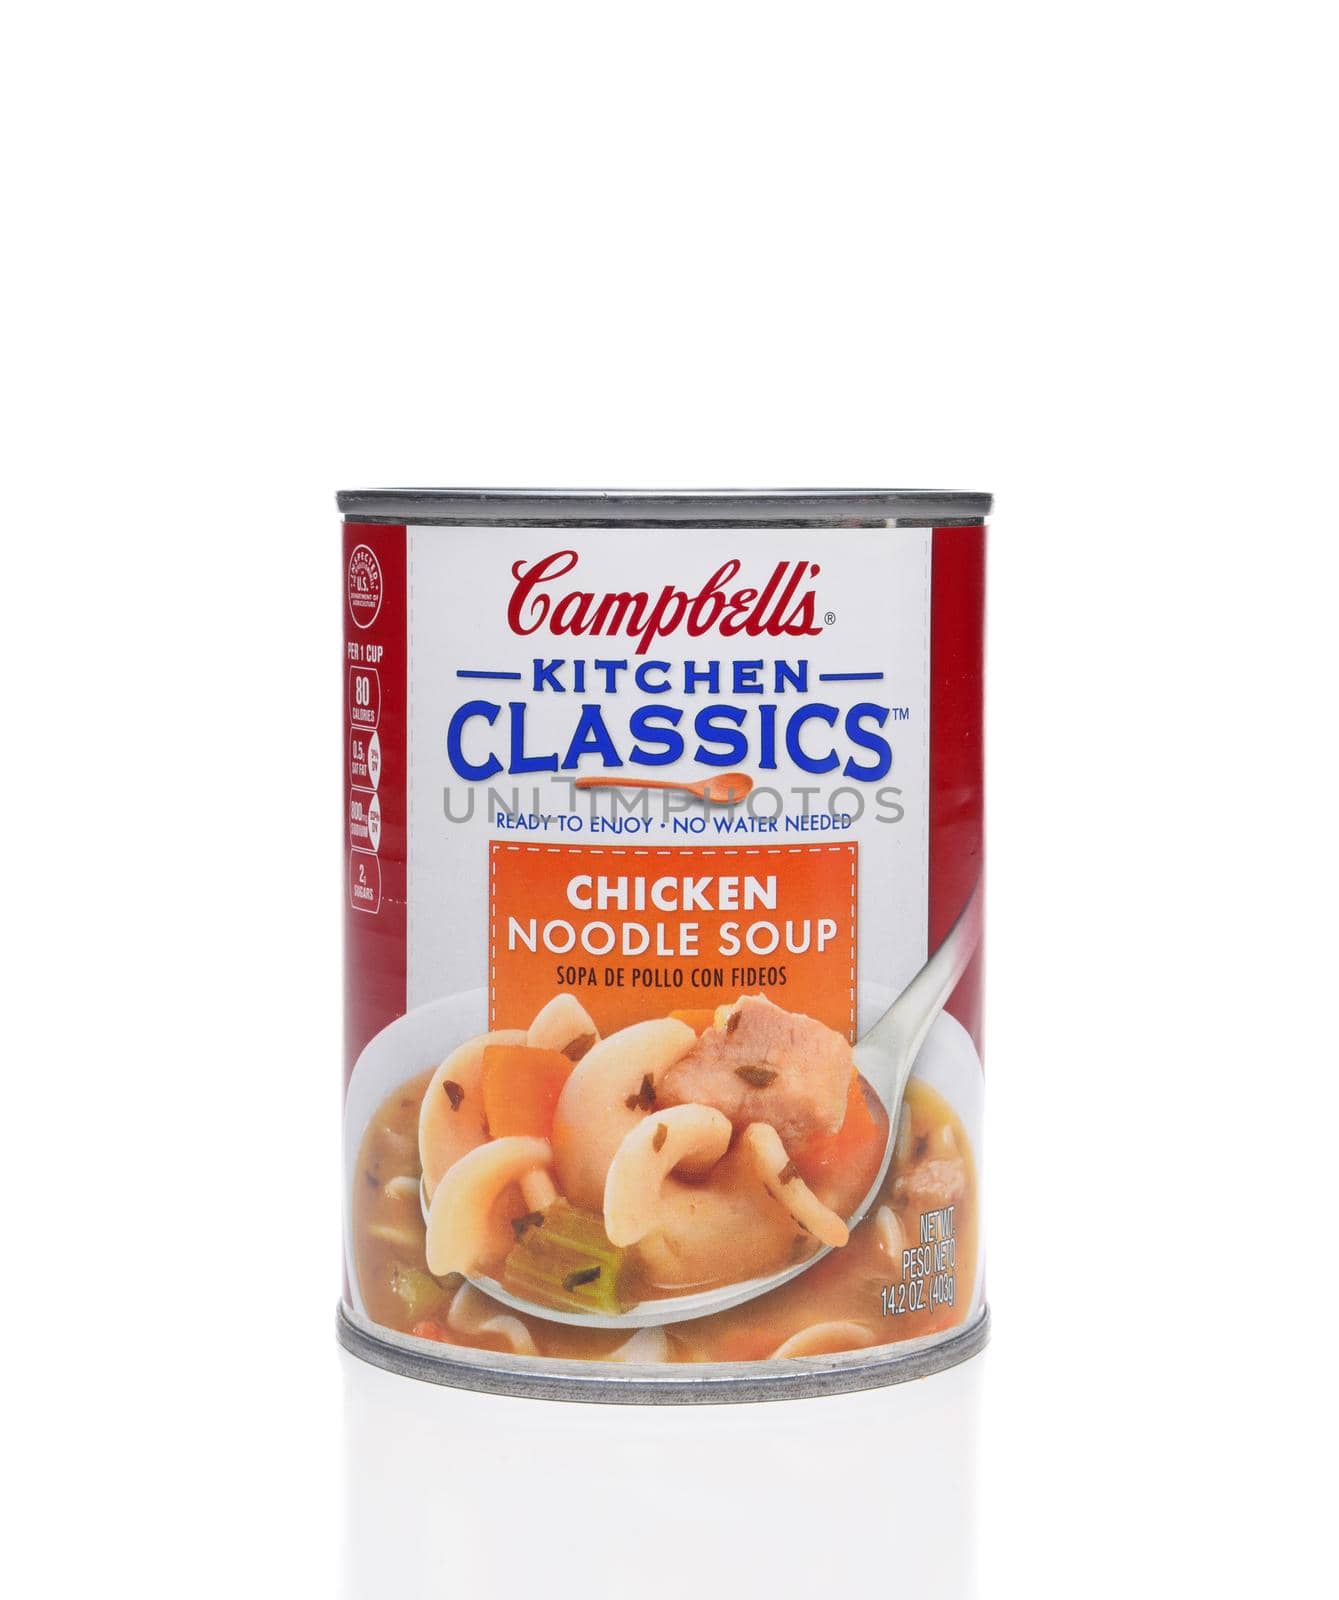 Campbells Kitchen Classics Chicken Noodle Soup by sCukrov